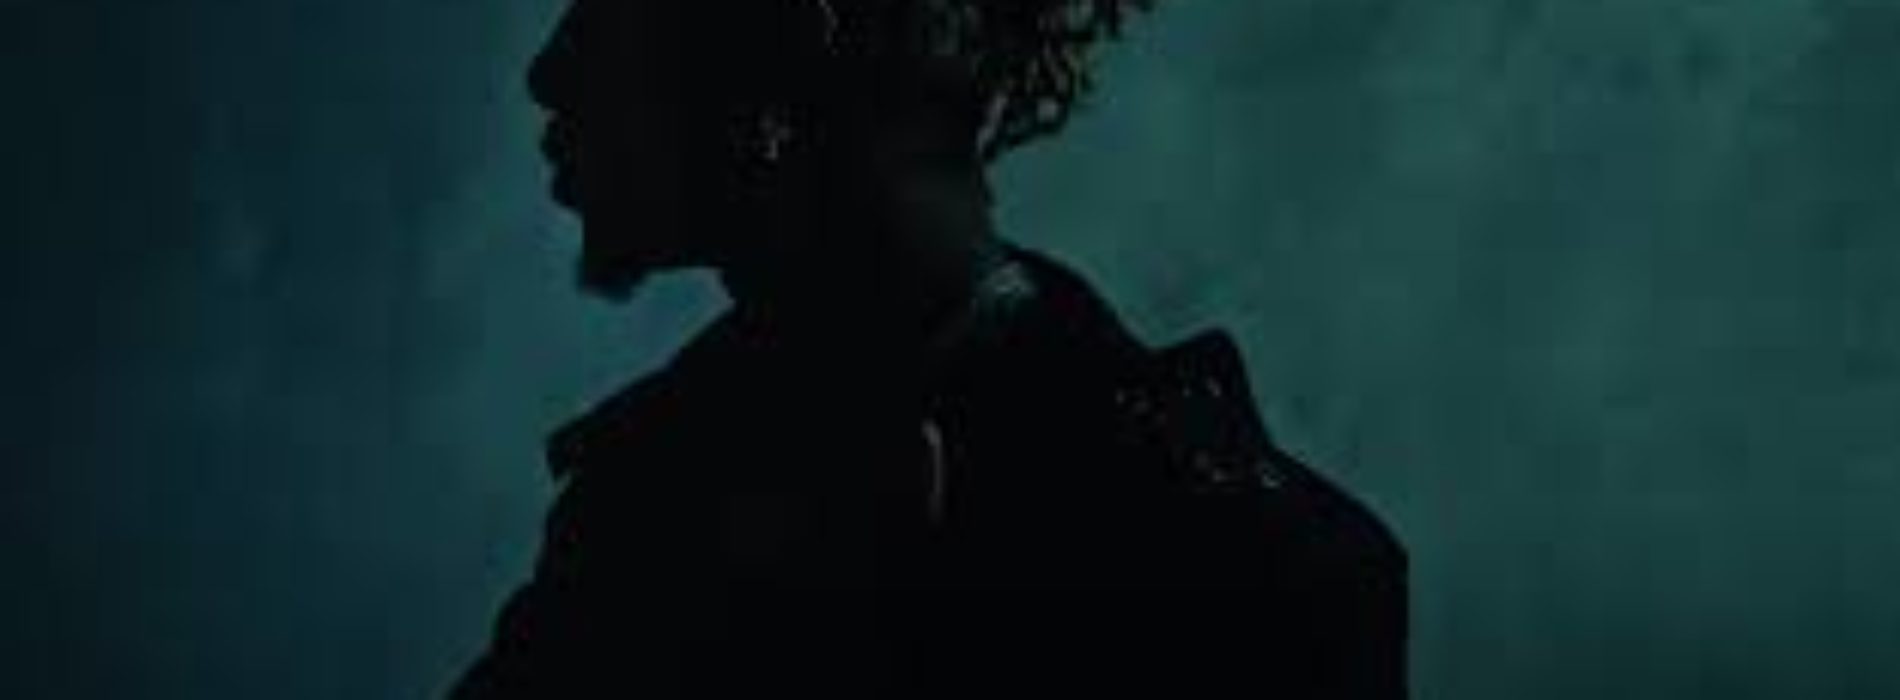 Playboi Carti – @ MEH [Official Video] – Avril 2020